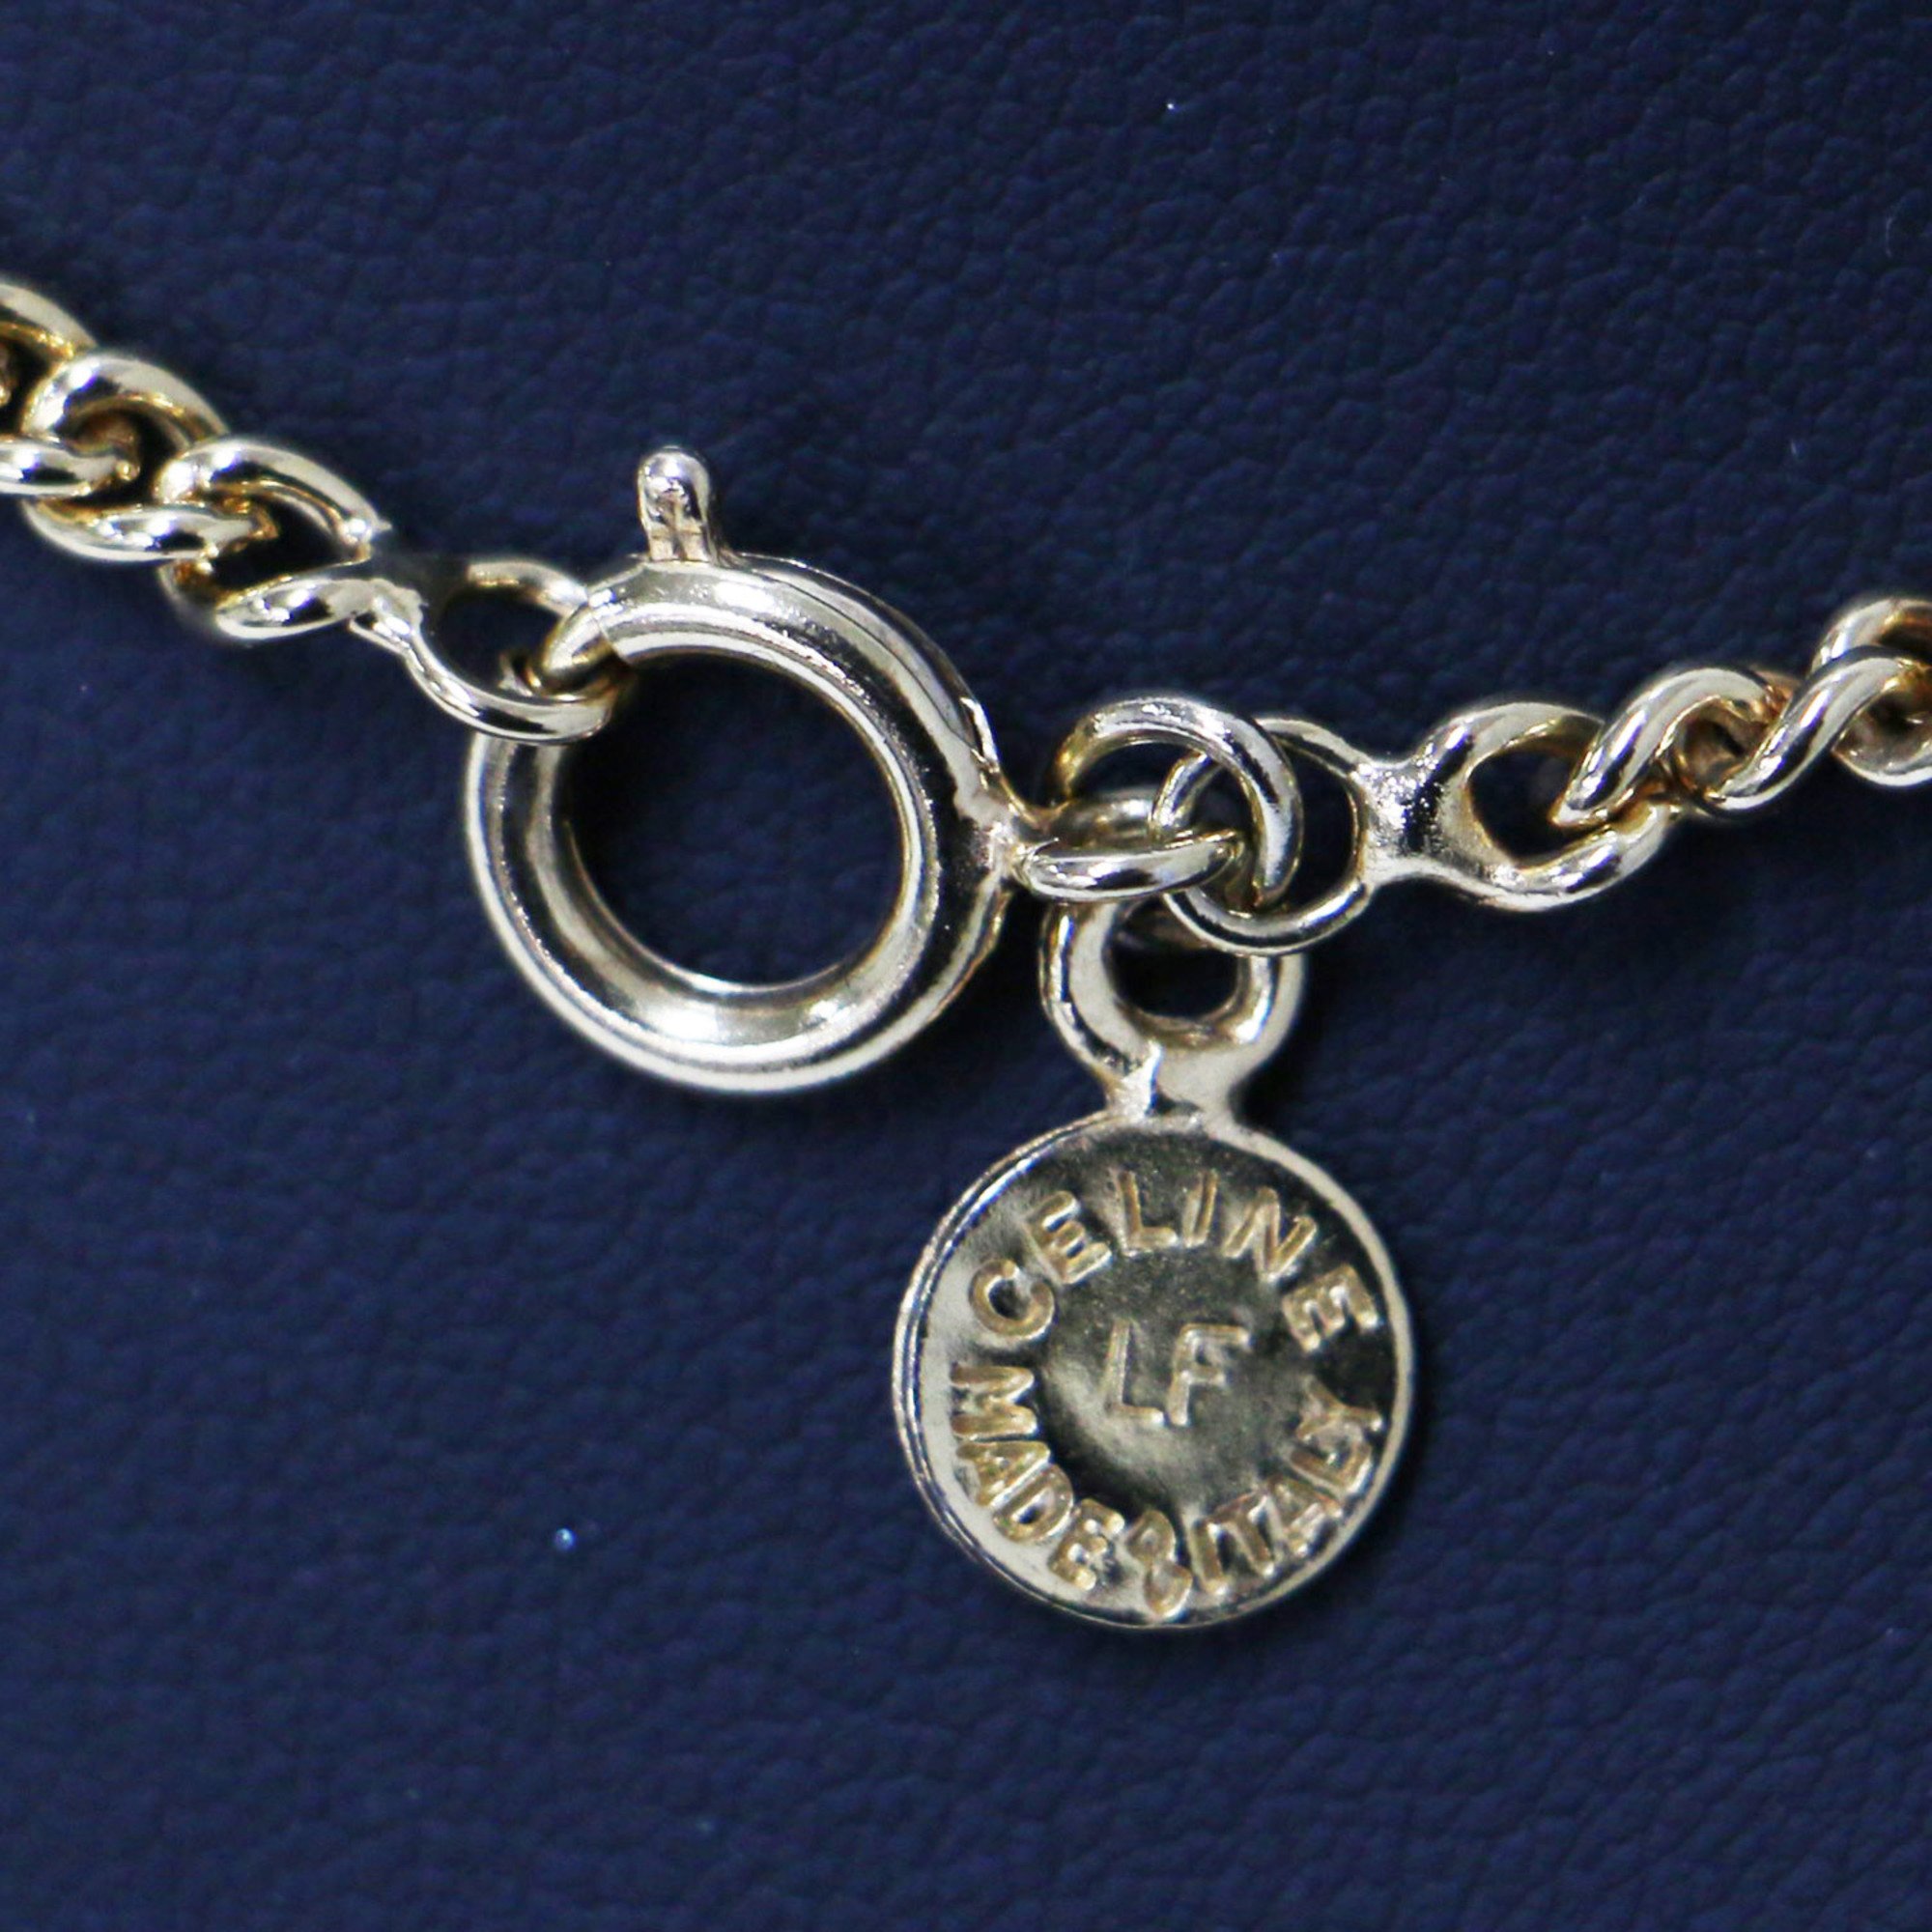 CELINE Necklace Gold Circle Motif 3 Row Logo Chain Vintage Accessories Pendant Jewelry Women's